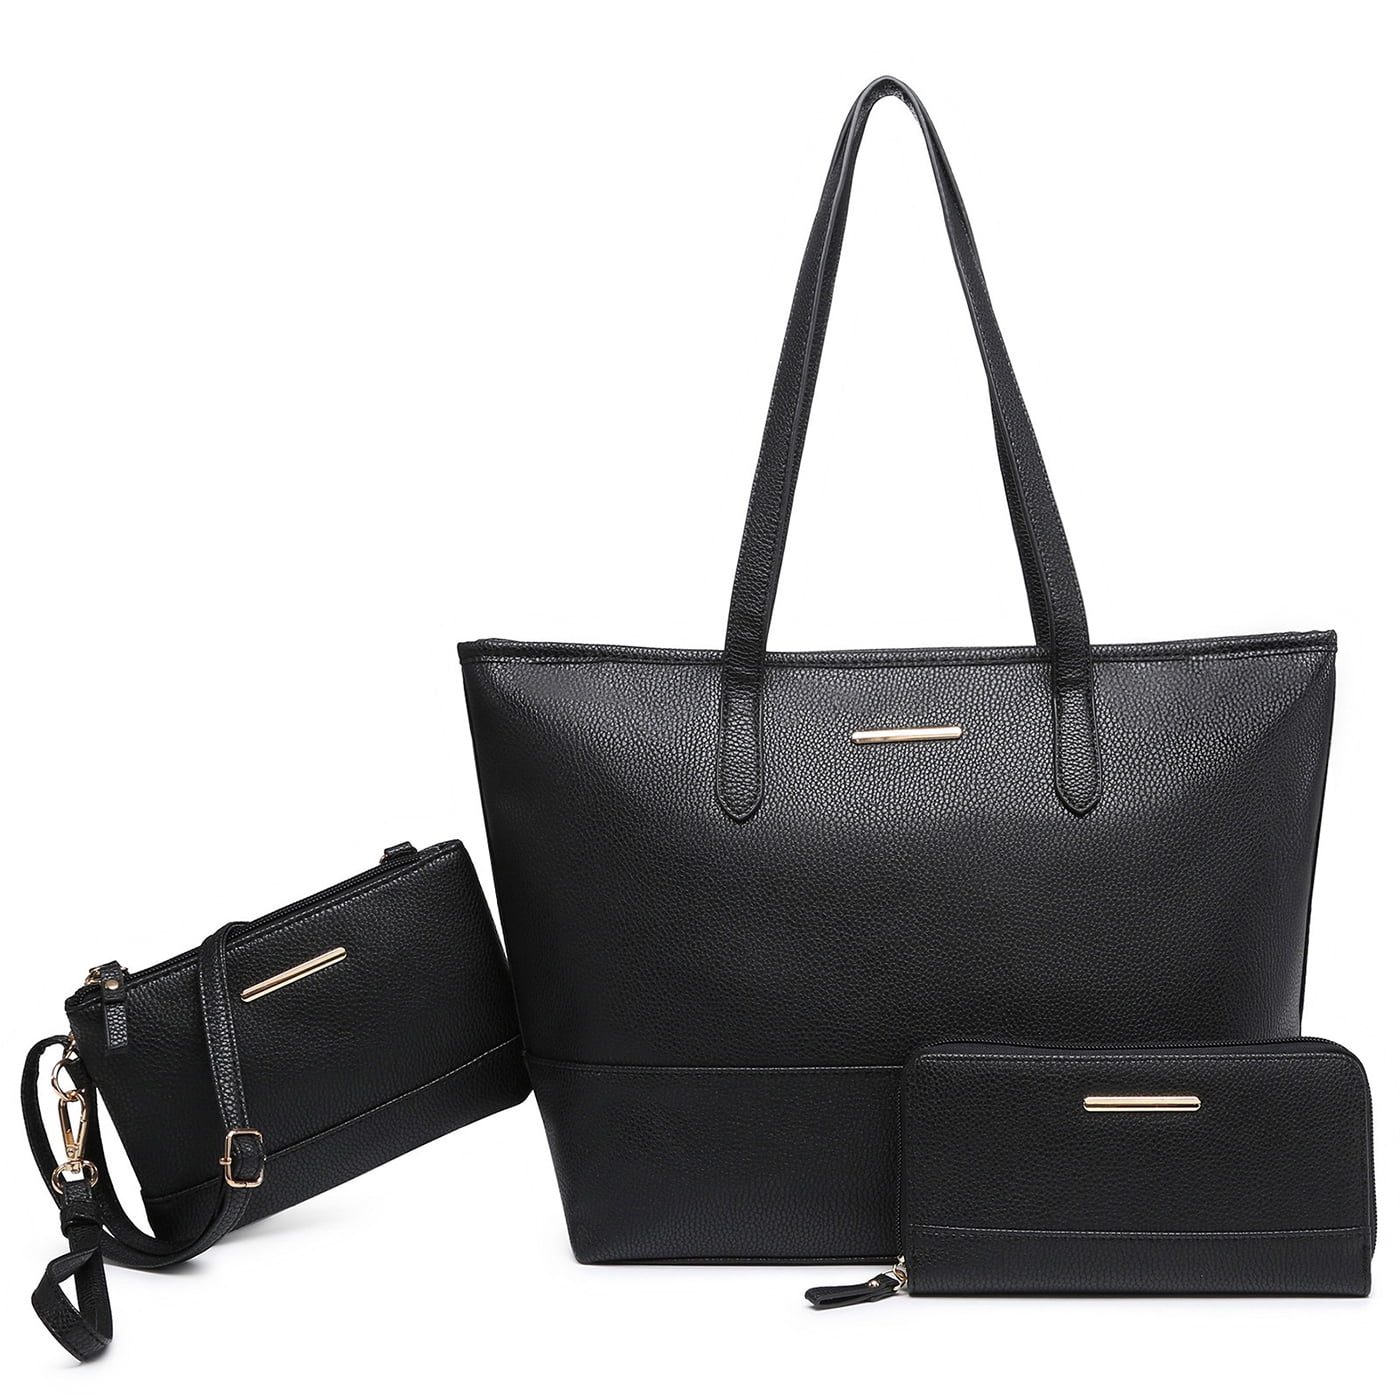 VANSARTO Women's Large Handbags Work Tote Vegan Leather Satchel Bag 7 ...